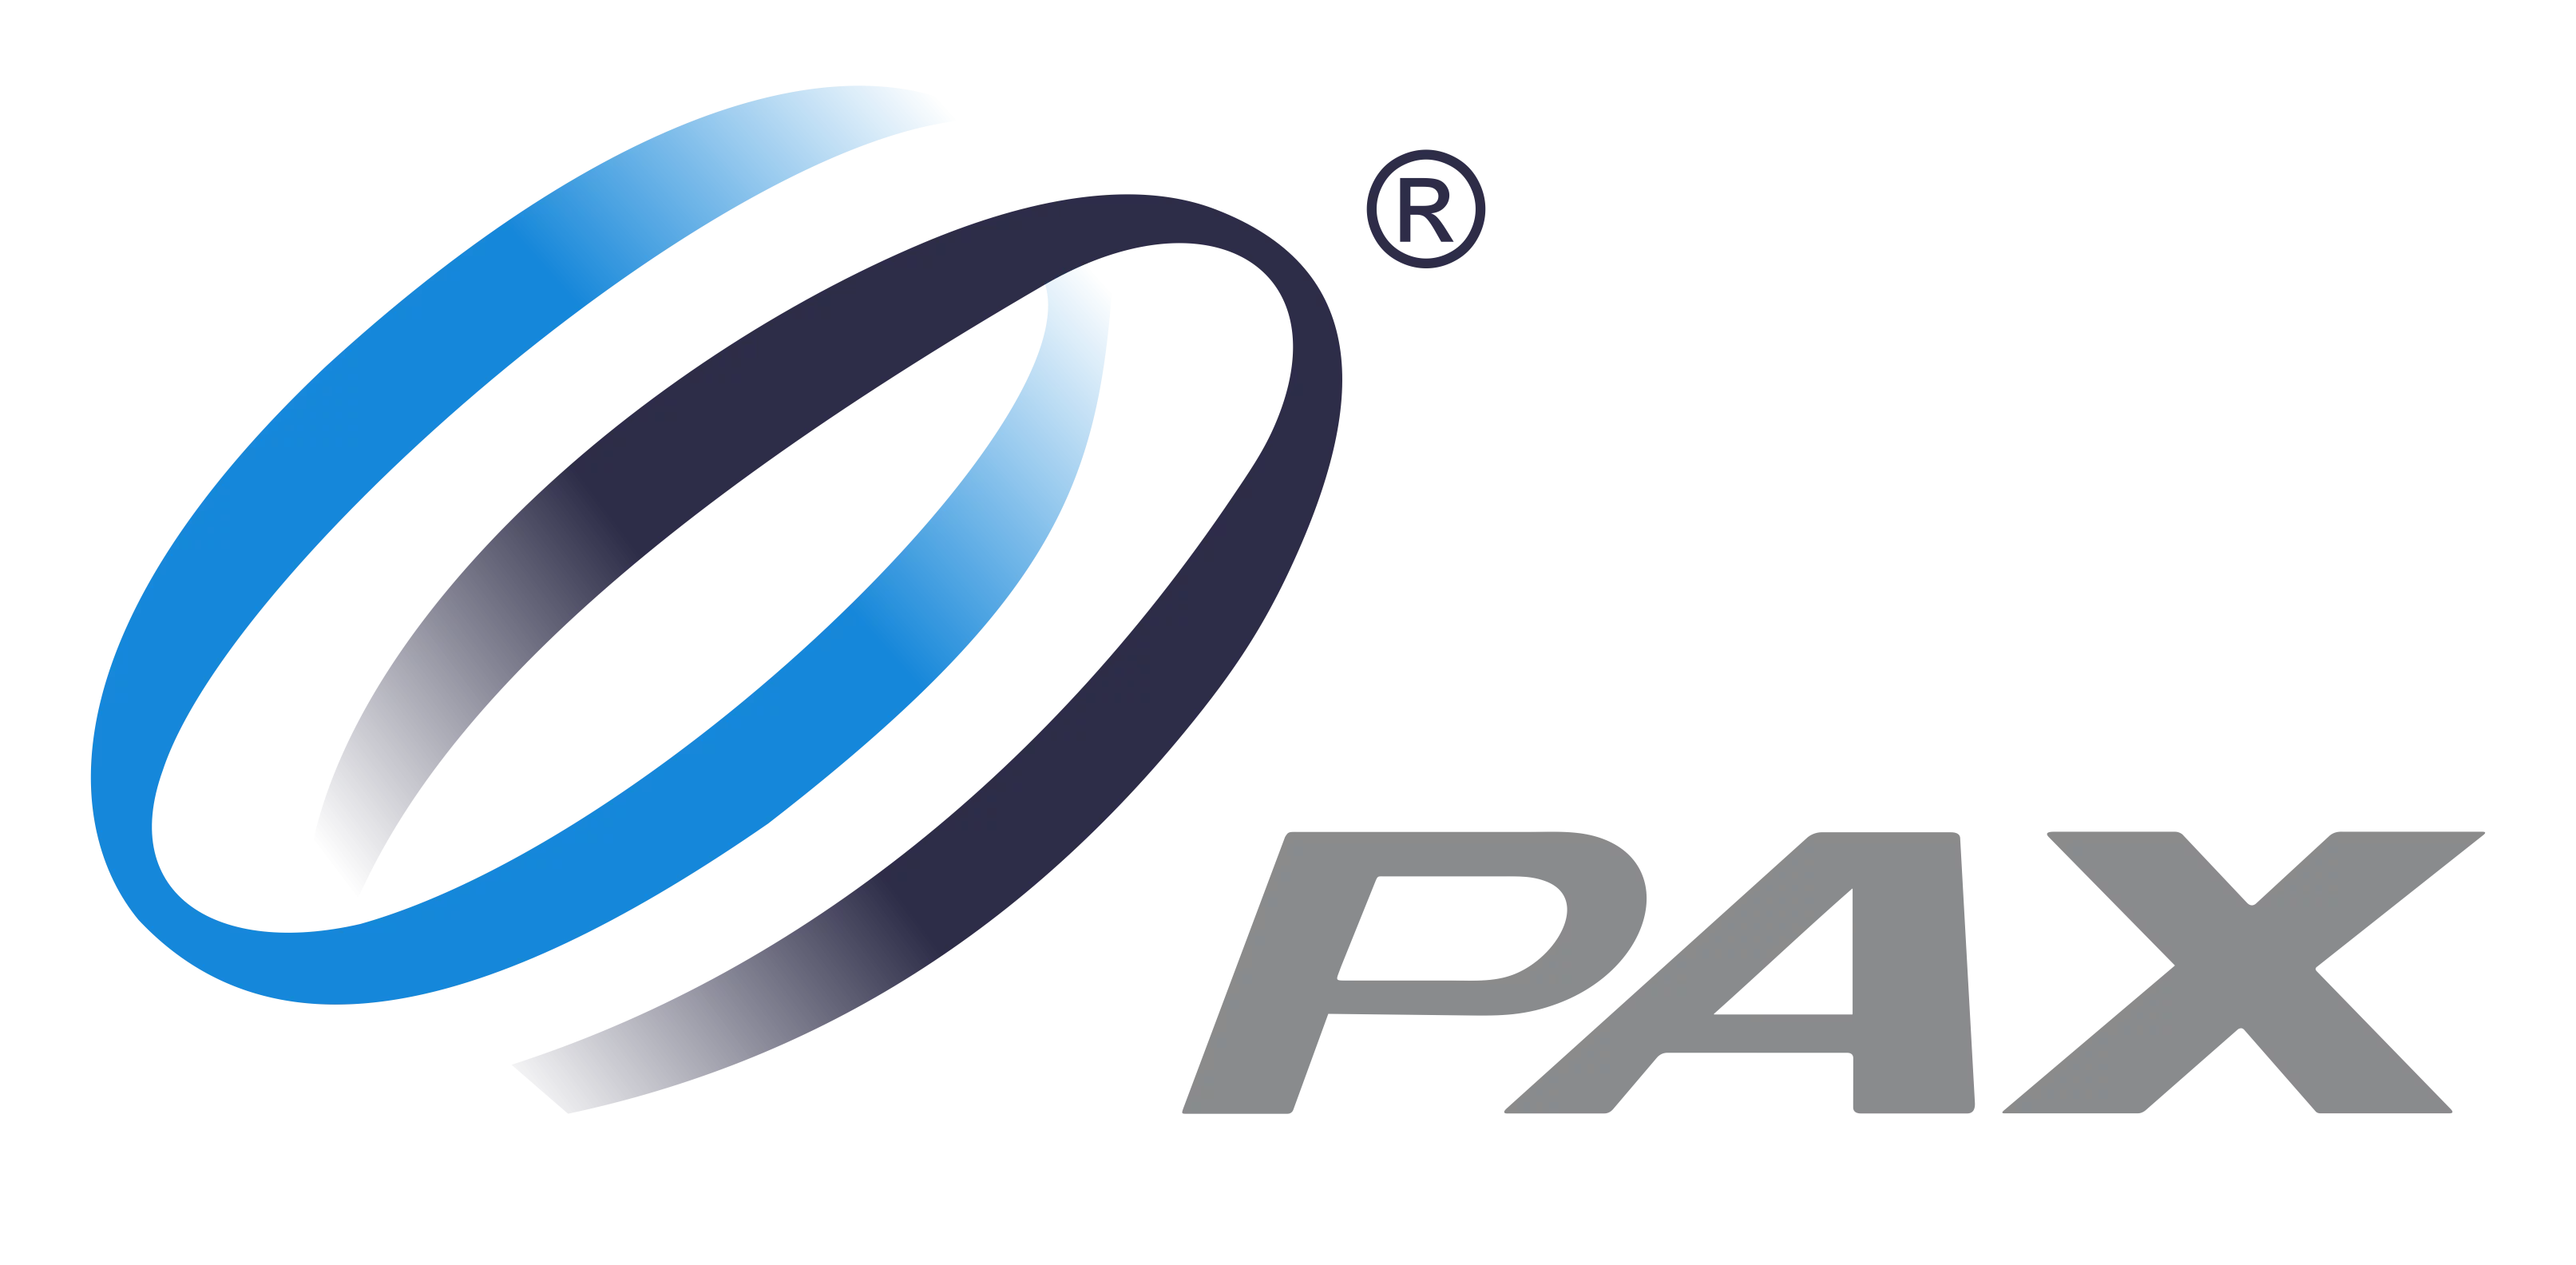 Pax Technology